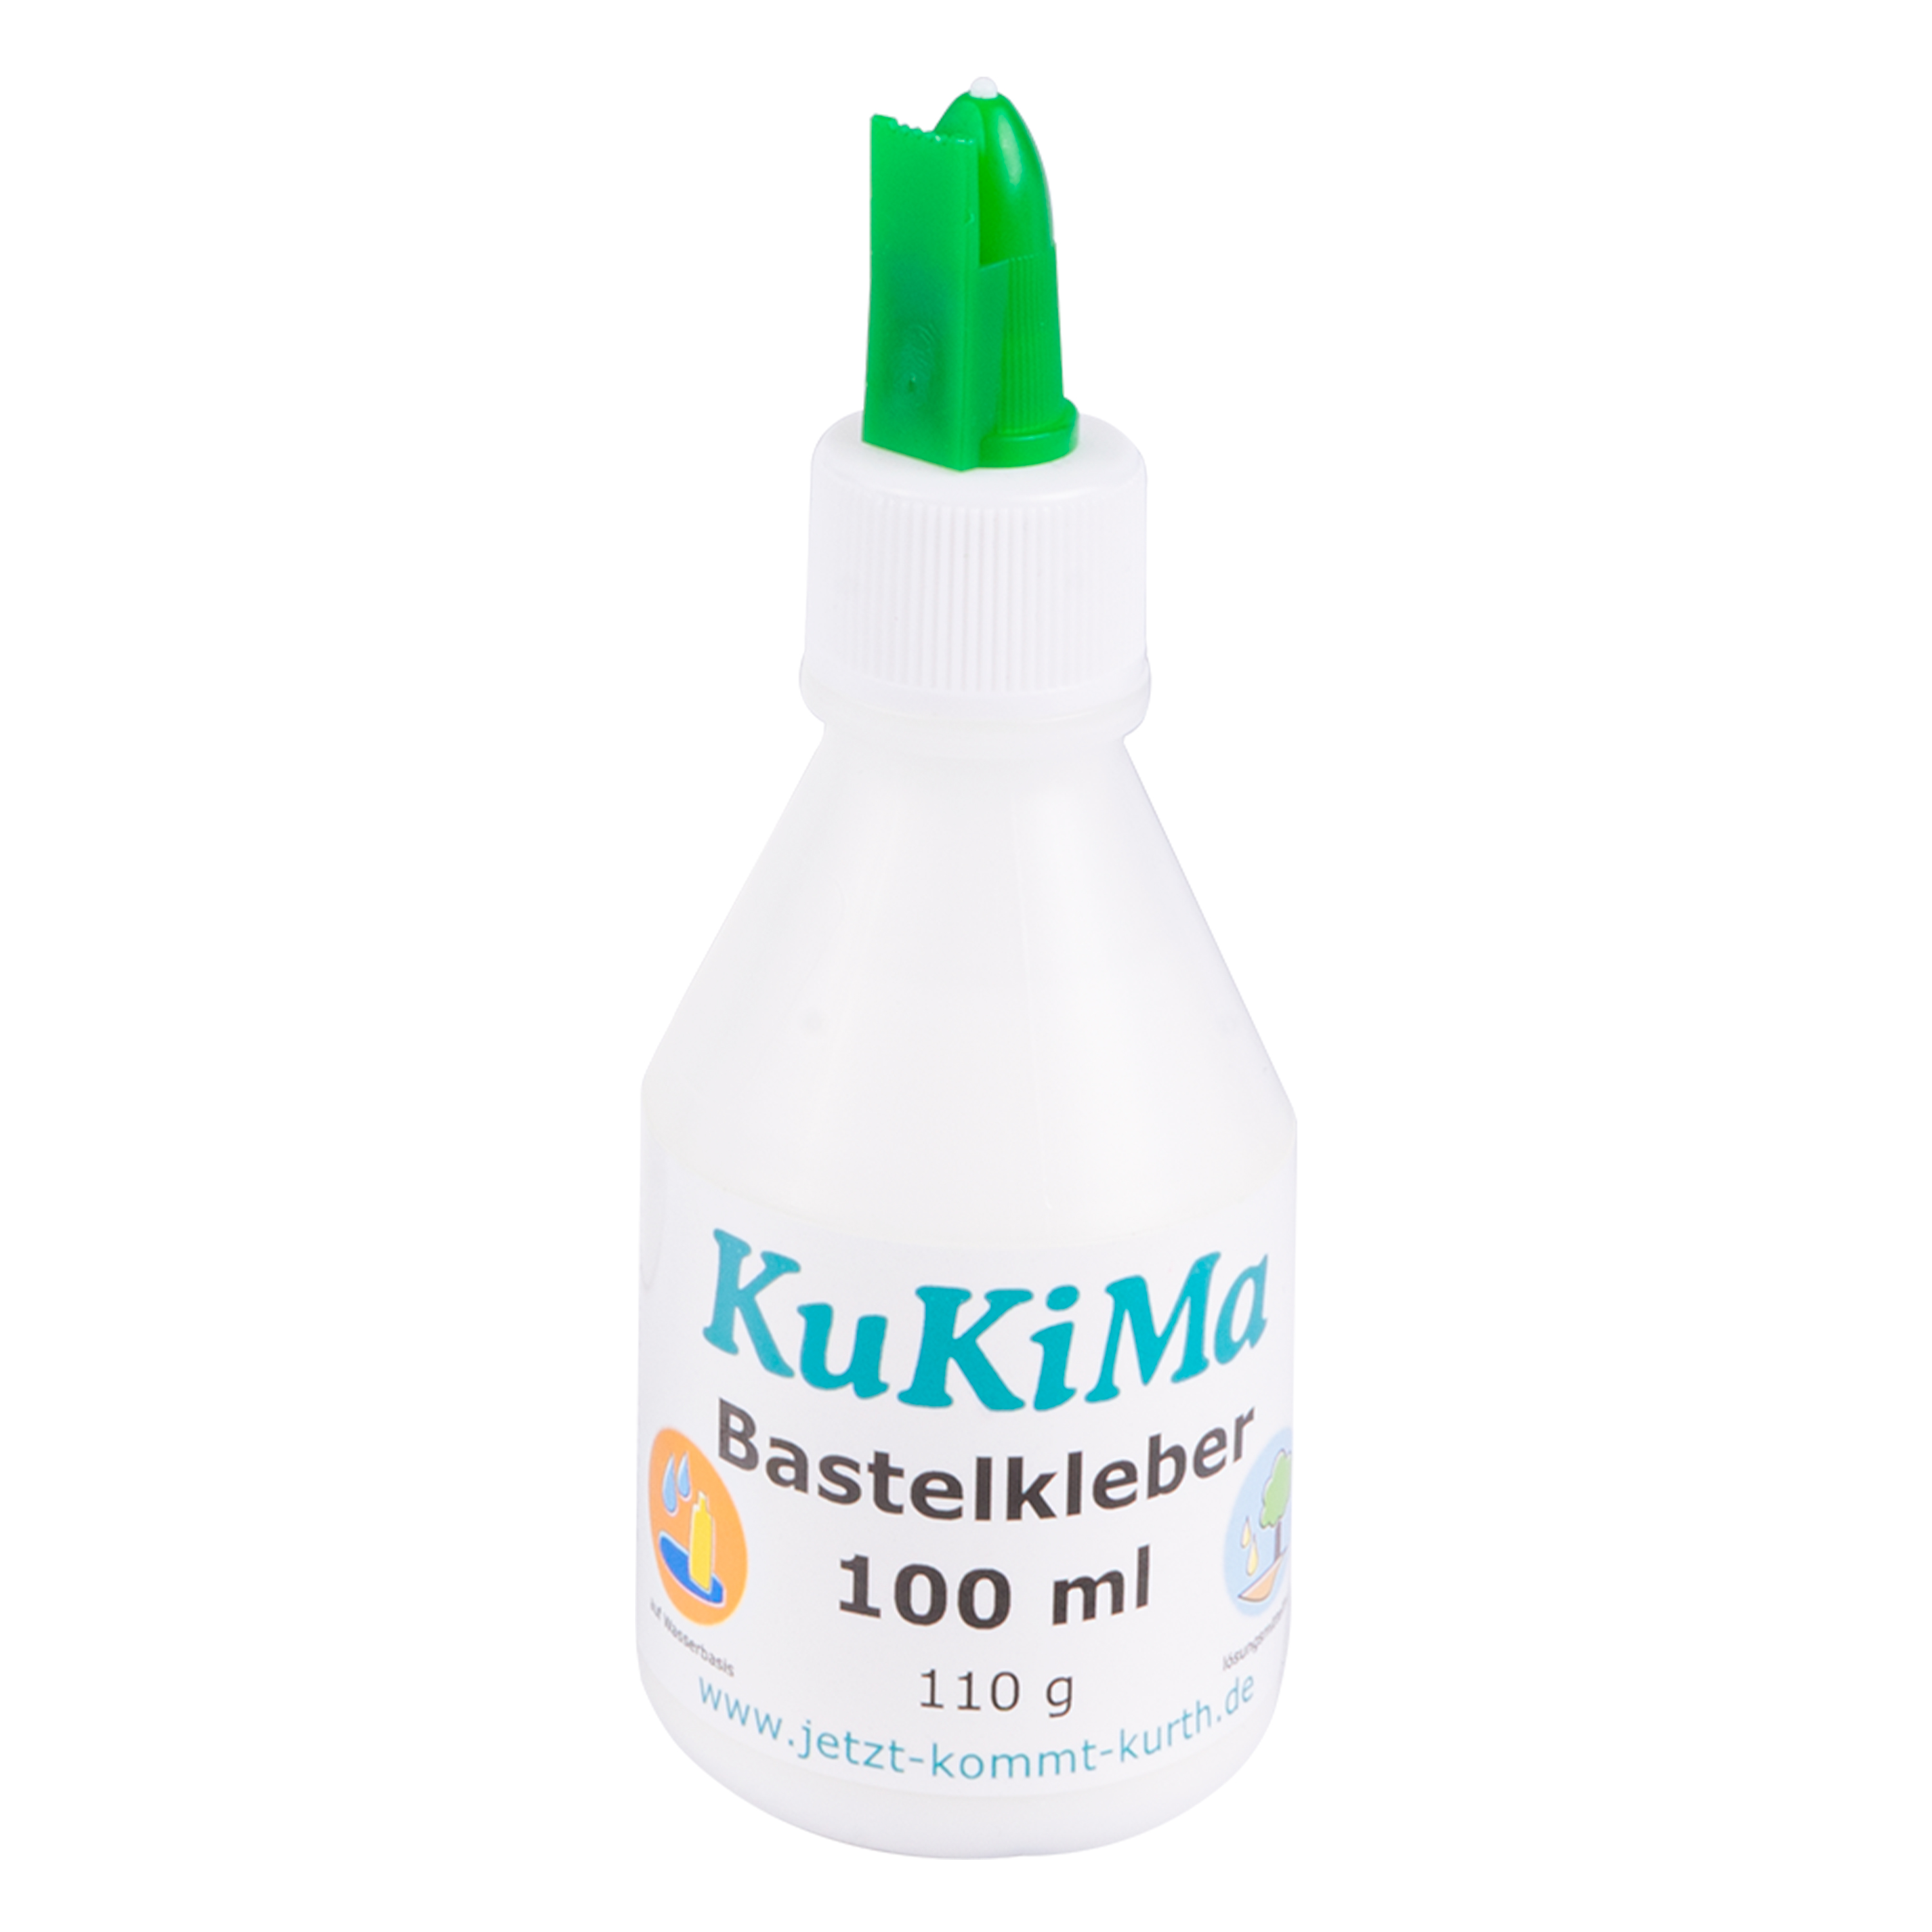 KuKiMa Bastelkleber lösungsmittelfrei Einzelflasche 100 ml